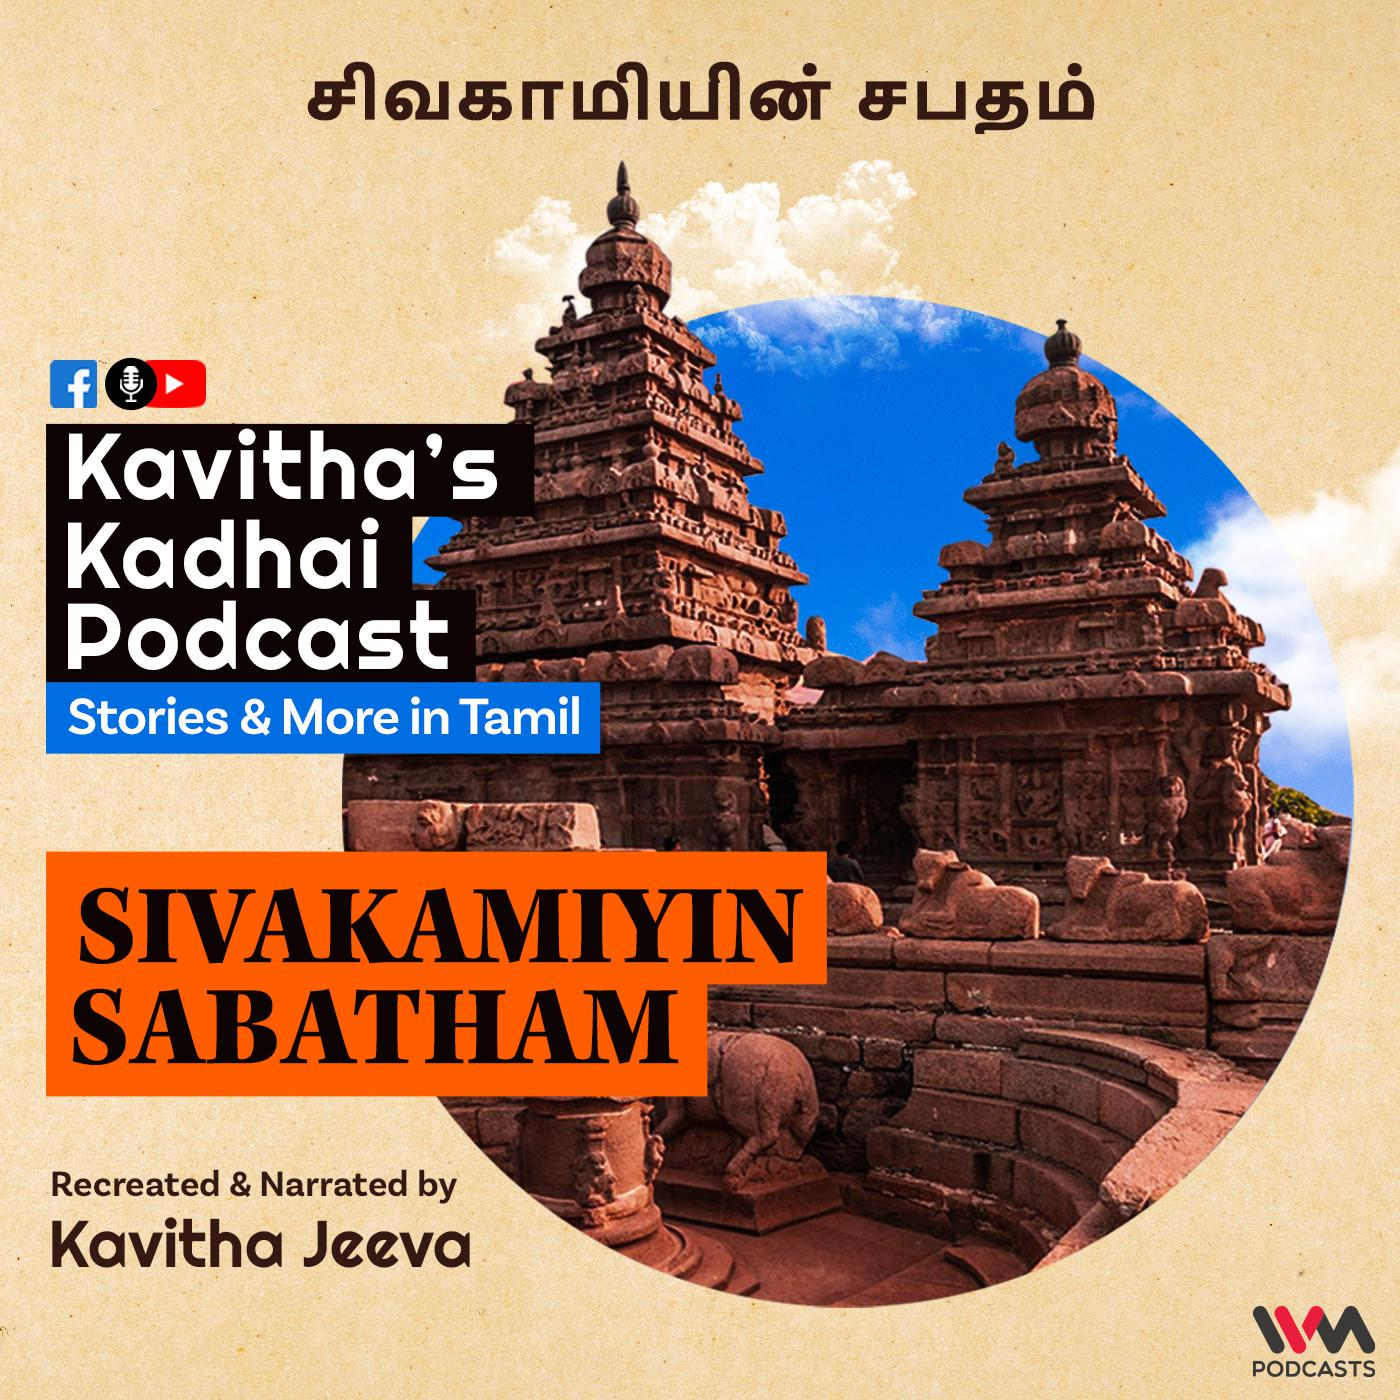 KadhaiPodcast's Sivakamiyin Sabatham with Kavitha Jeeva - Episode #109